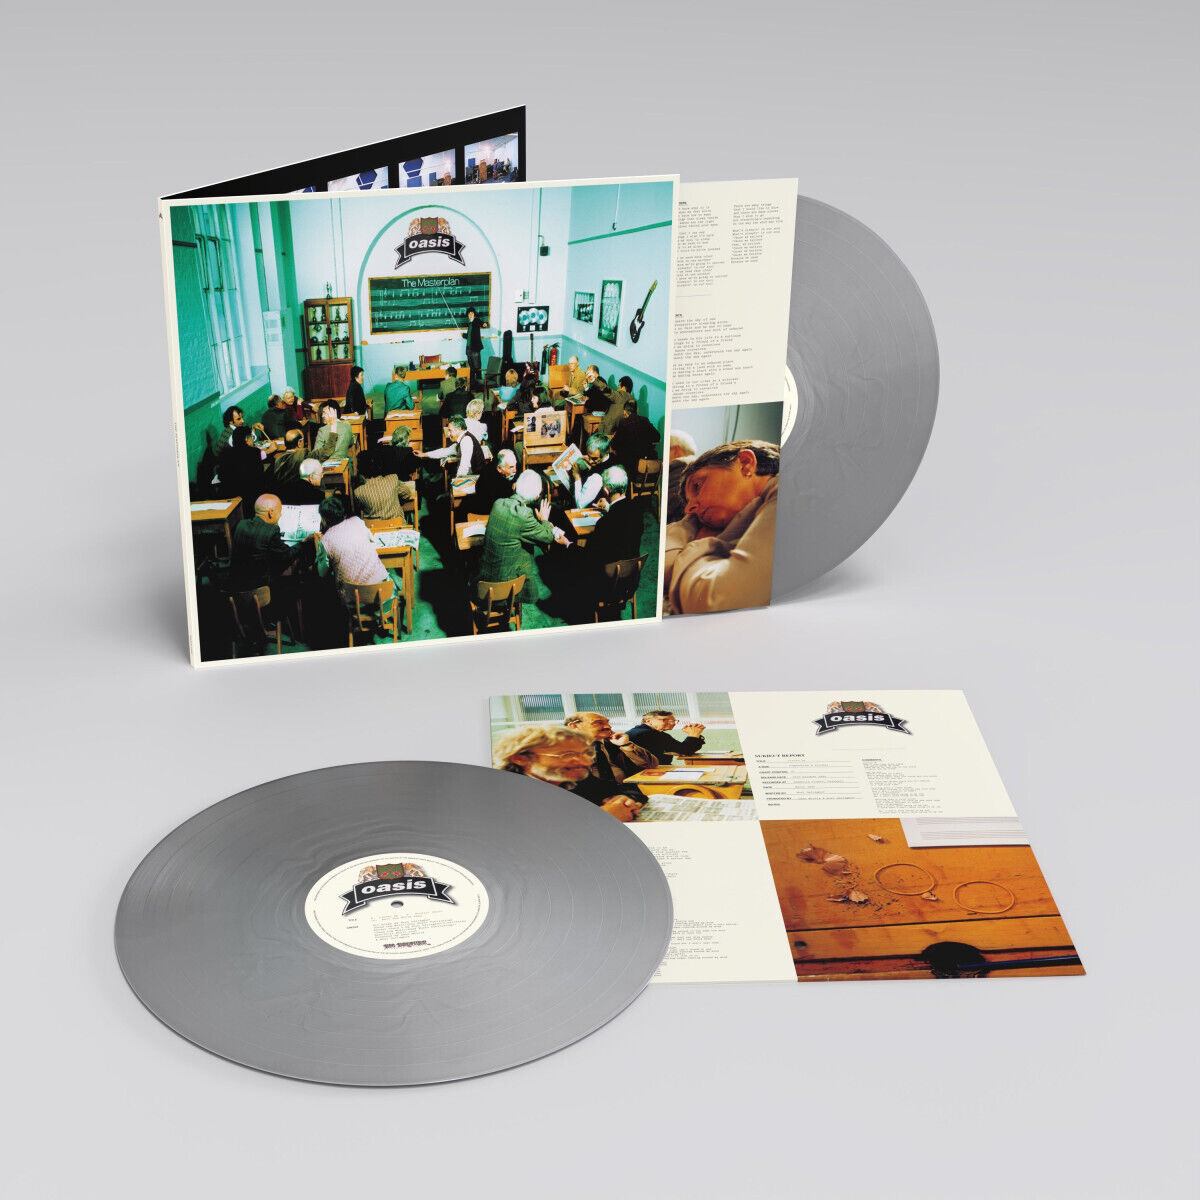 Oasis – THE MASTERPLAN (REMASTERED) SILVER VINYL LP